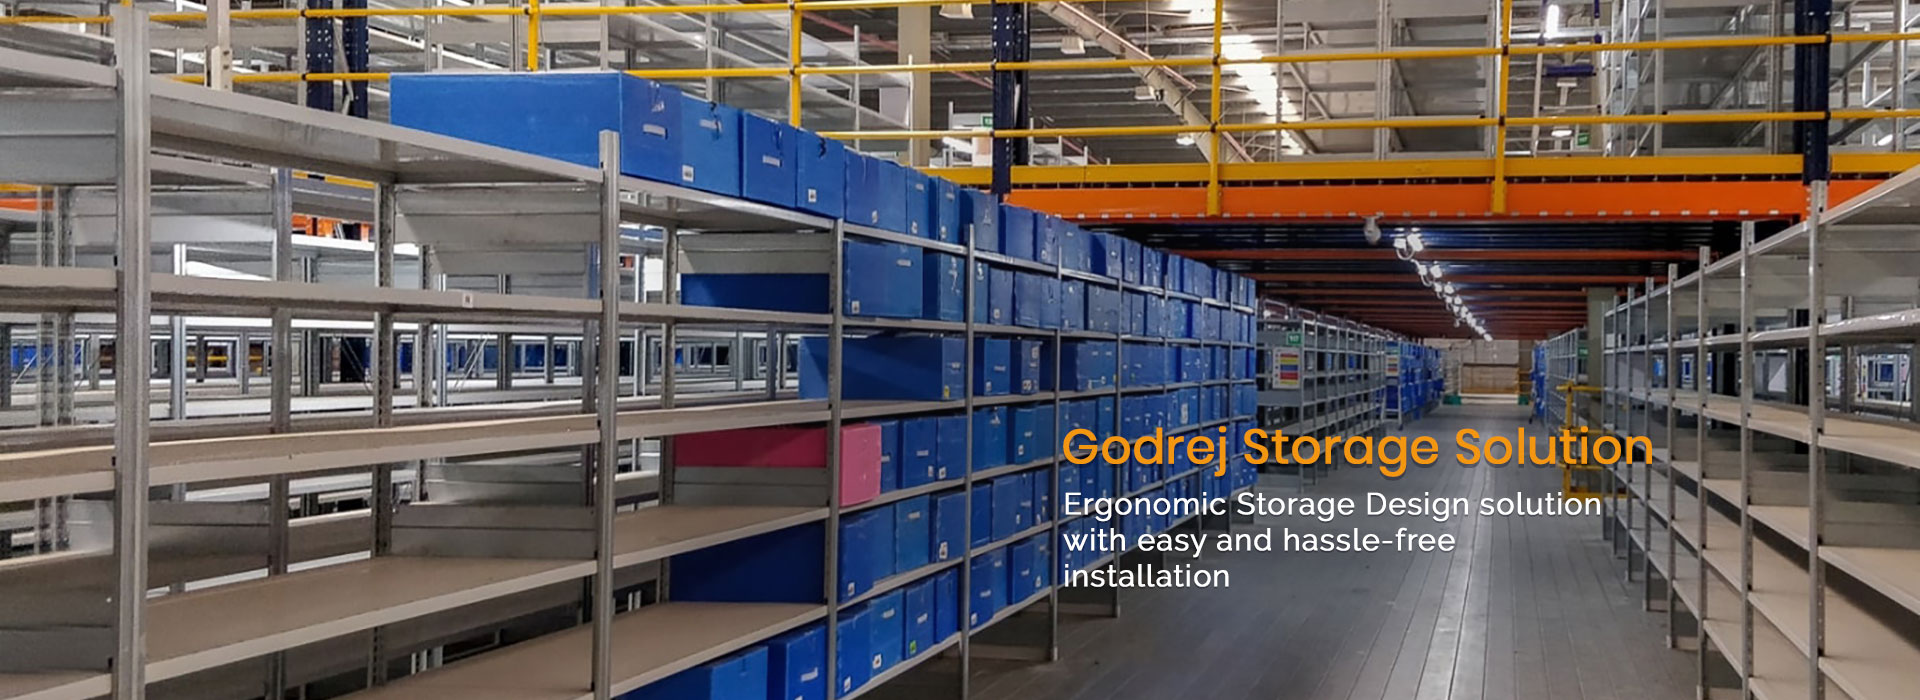 Godrej Storage Solutions in Imt Manesar